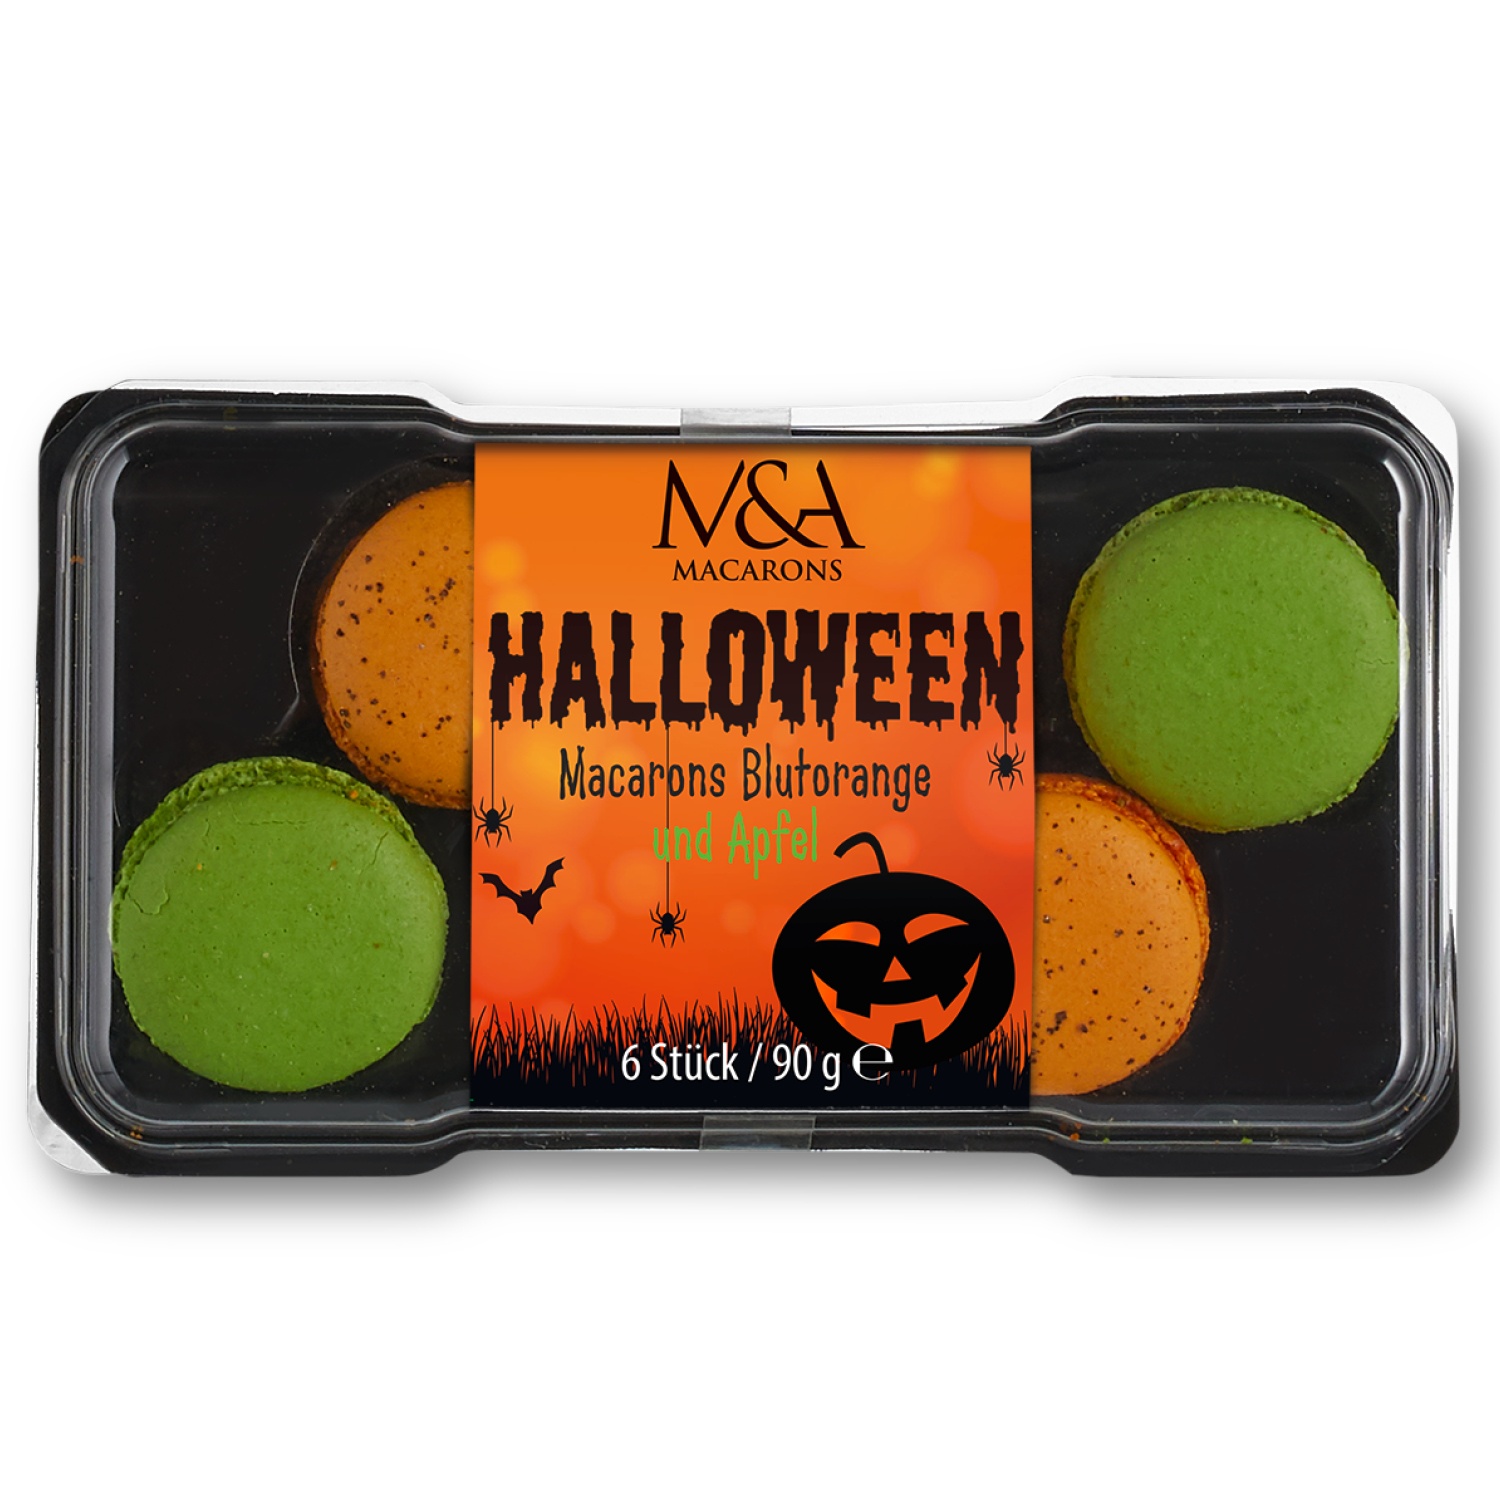 M&A Macarons Halloween Macarons 90g